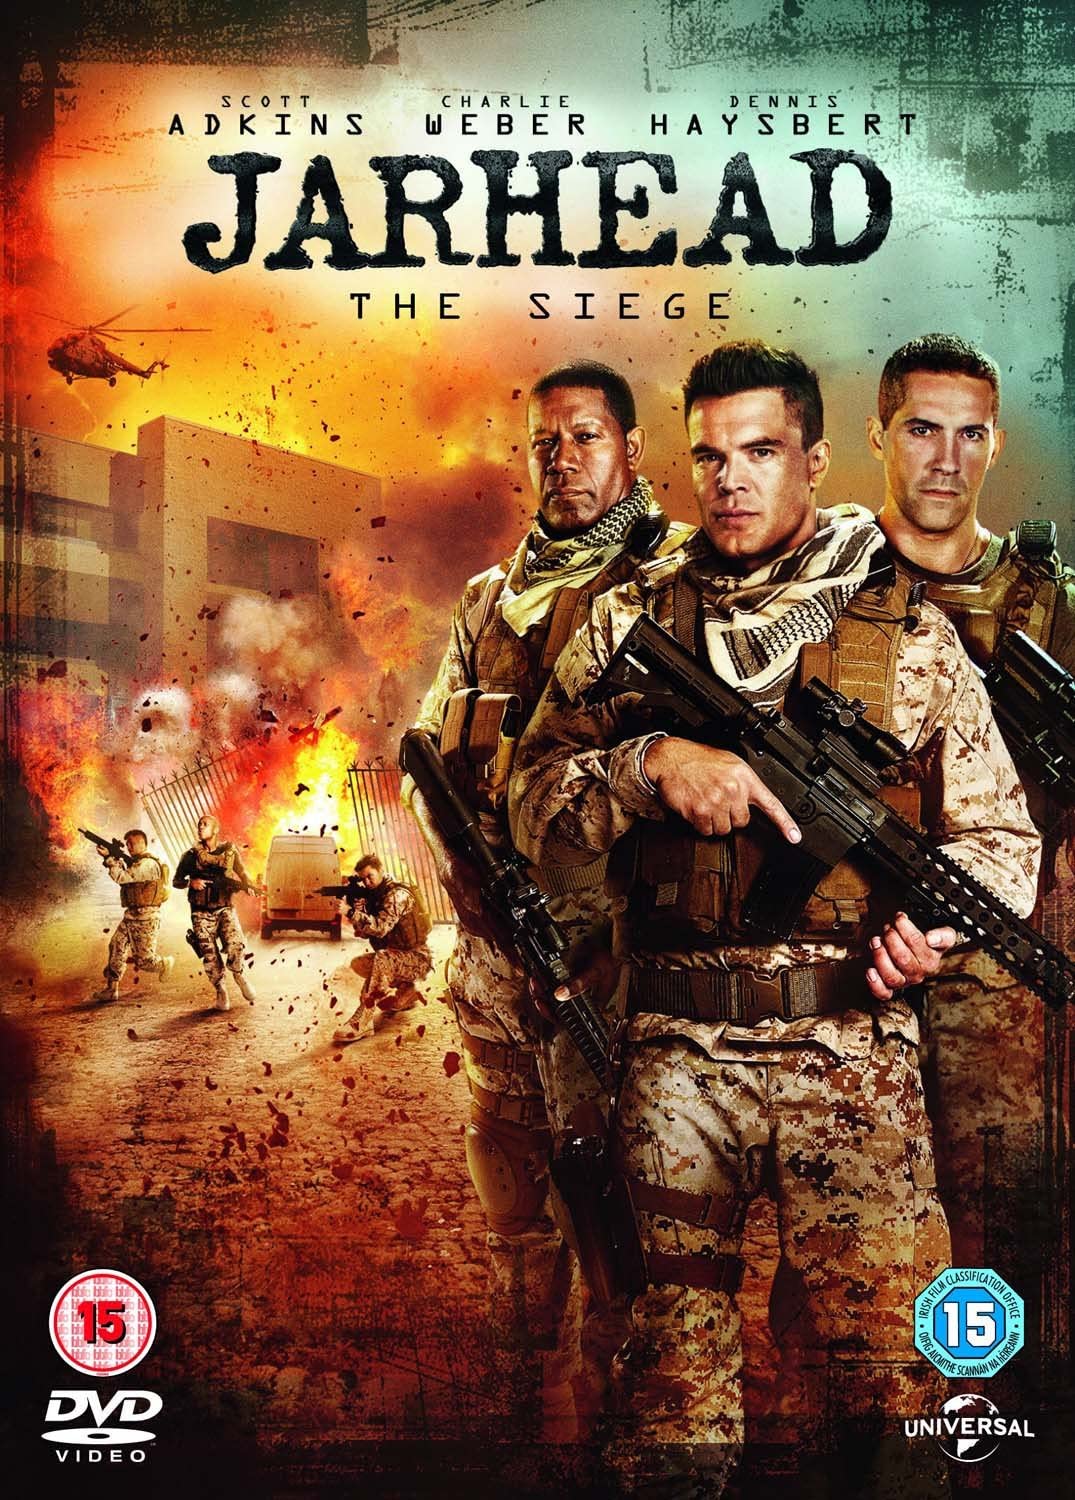 Jarhead: The Siege (DVD)